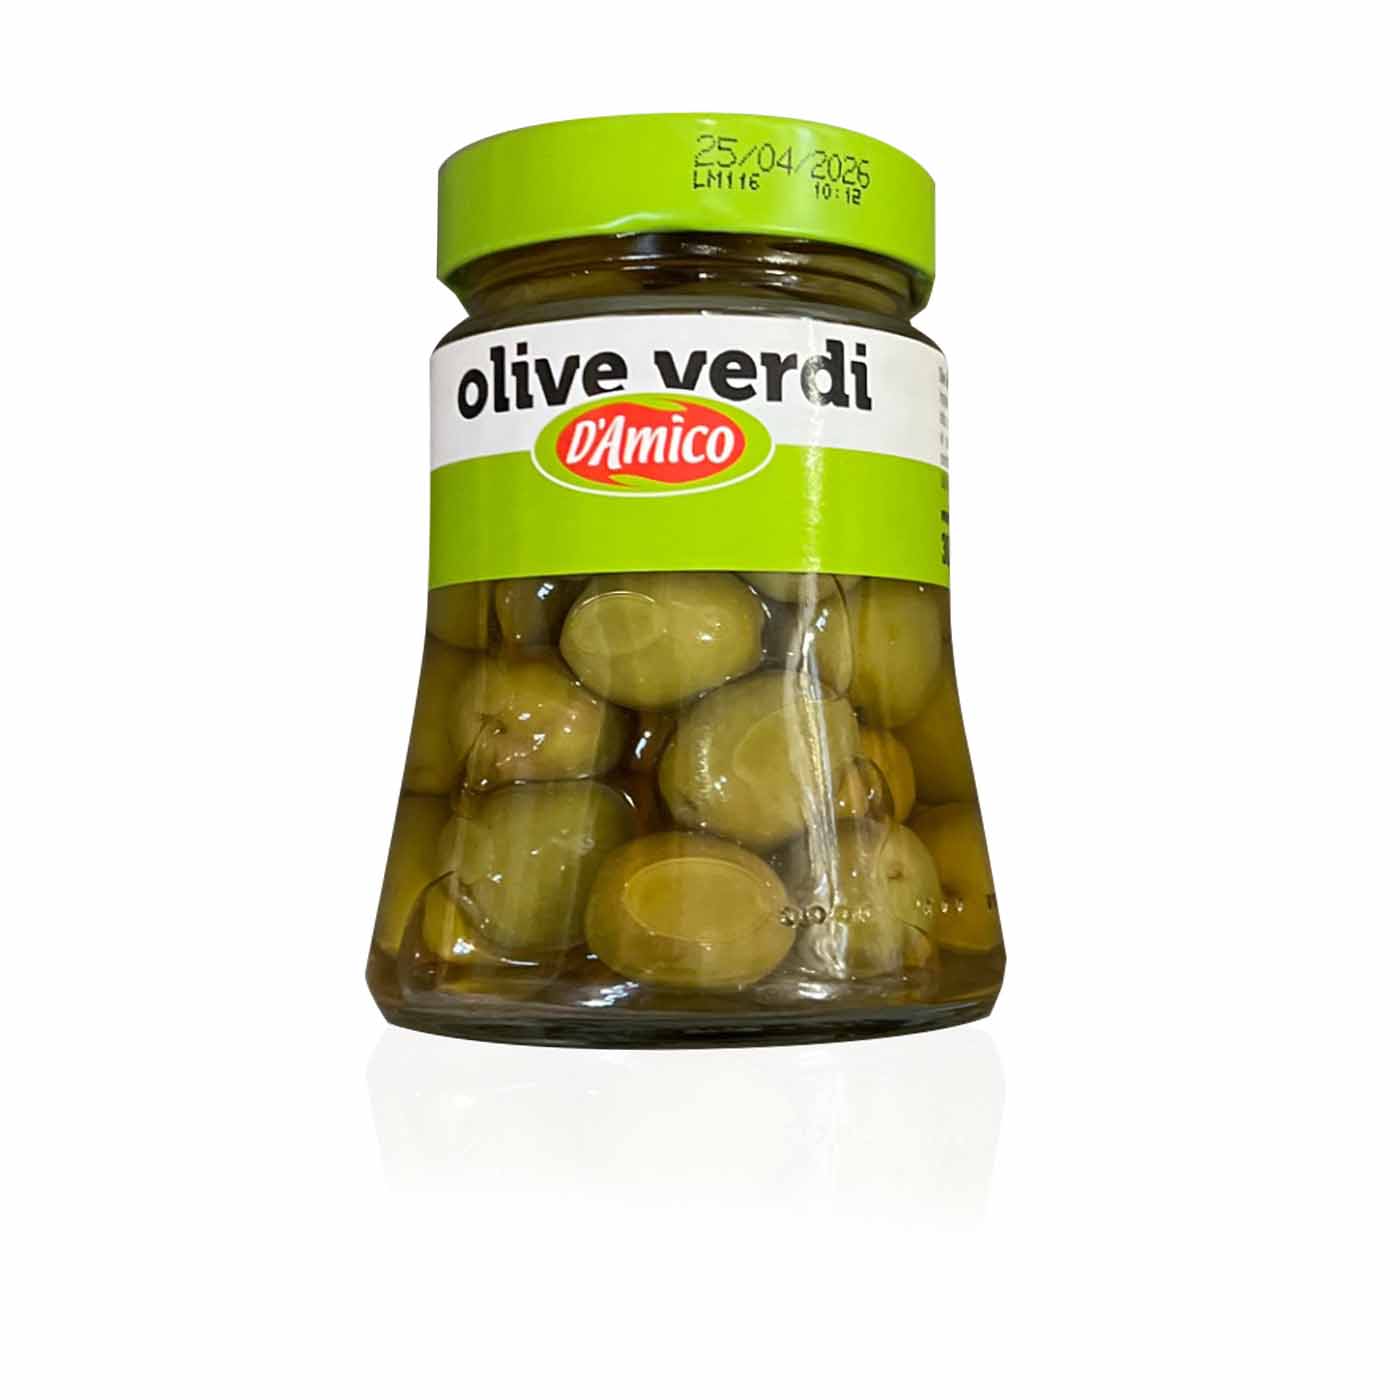 D'Amico Olive verdi - Grüne Oliven - 0,3kg